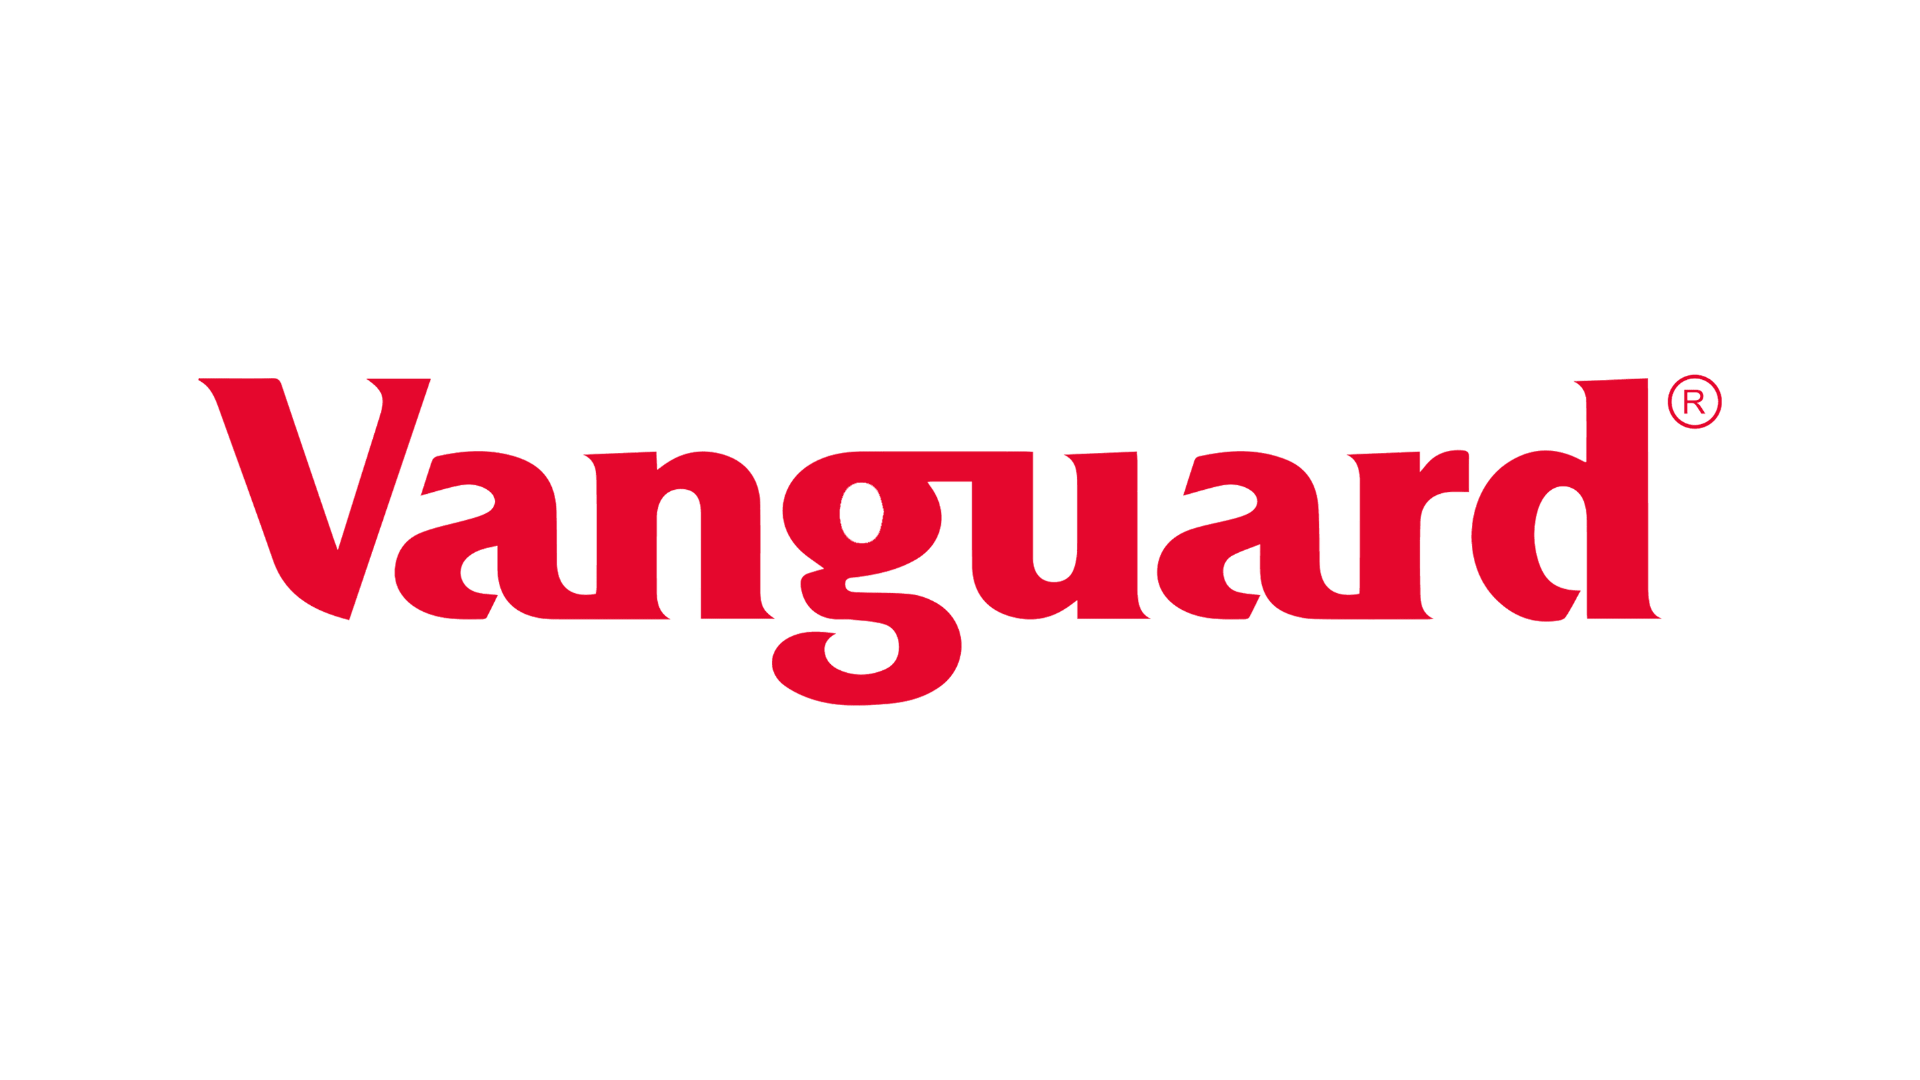 vanguard review logo